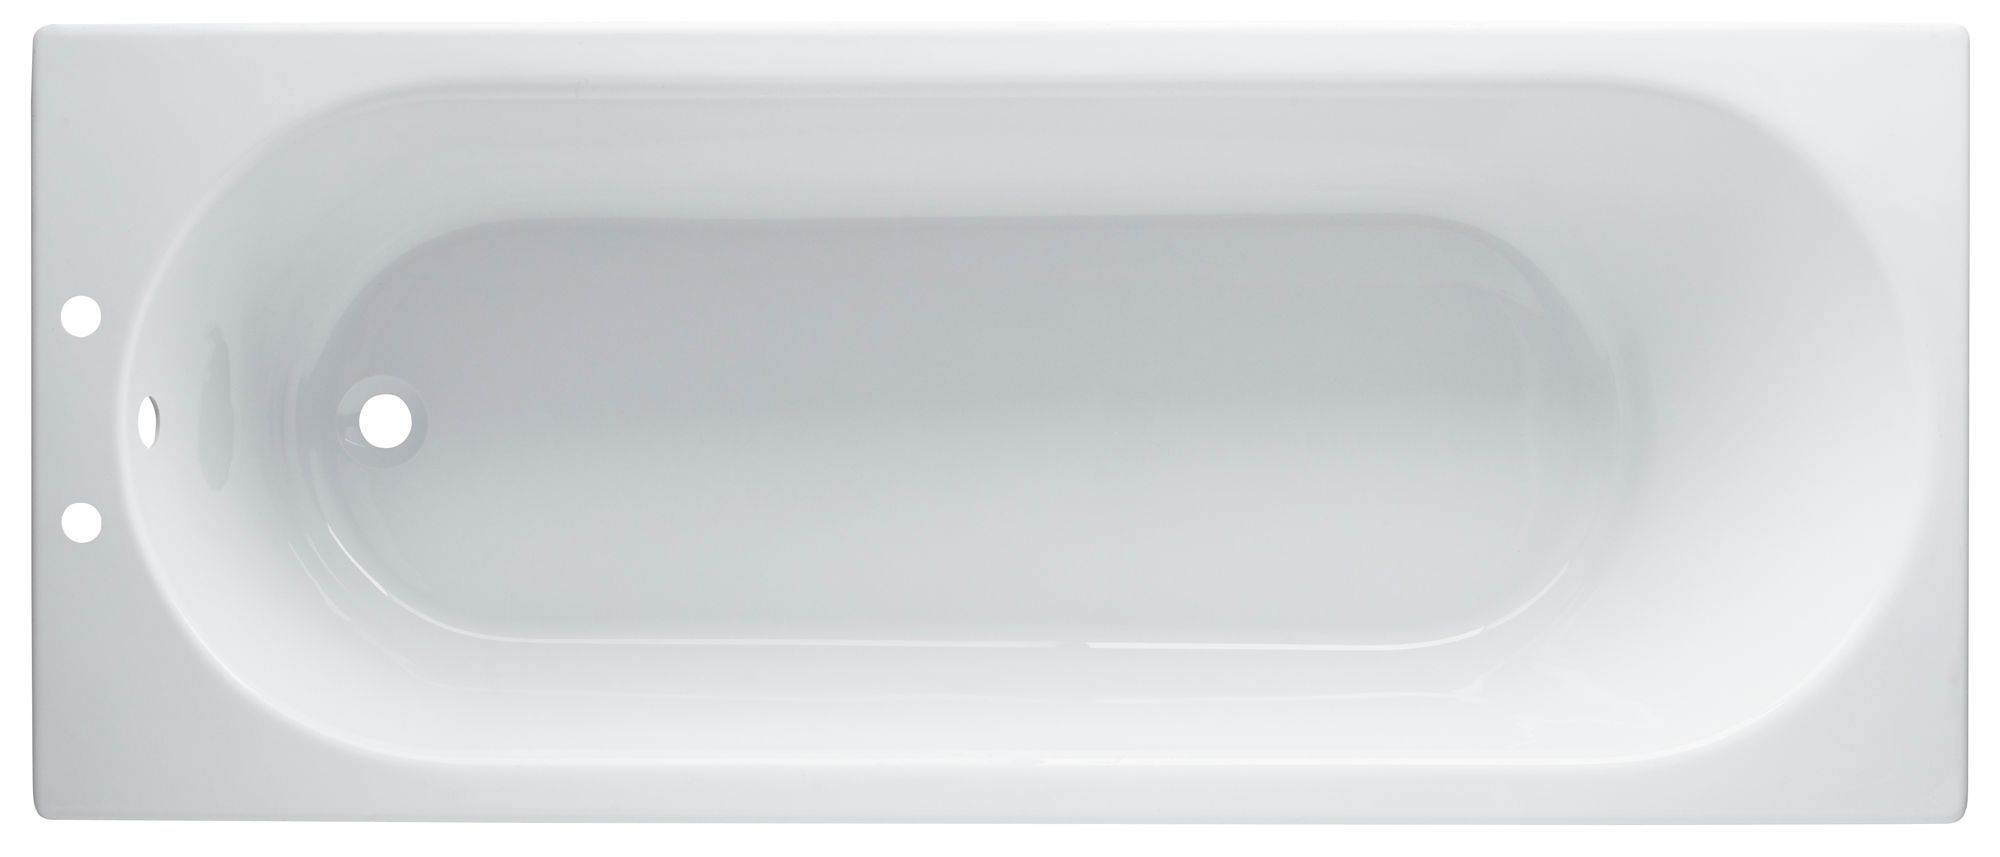 Cooke & Lewis Shaftesbury White Standard Acrylic Rectangular Straight Bath (L)1700mm (W)700mm